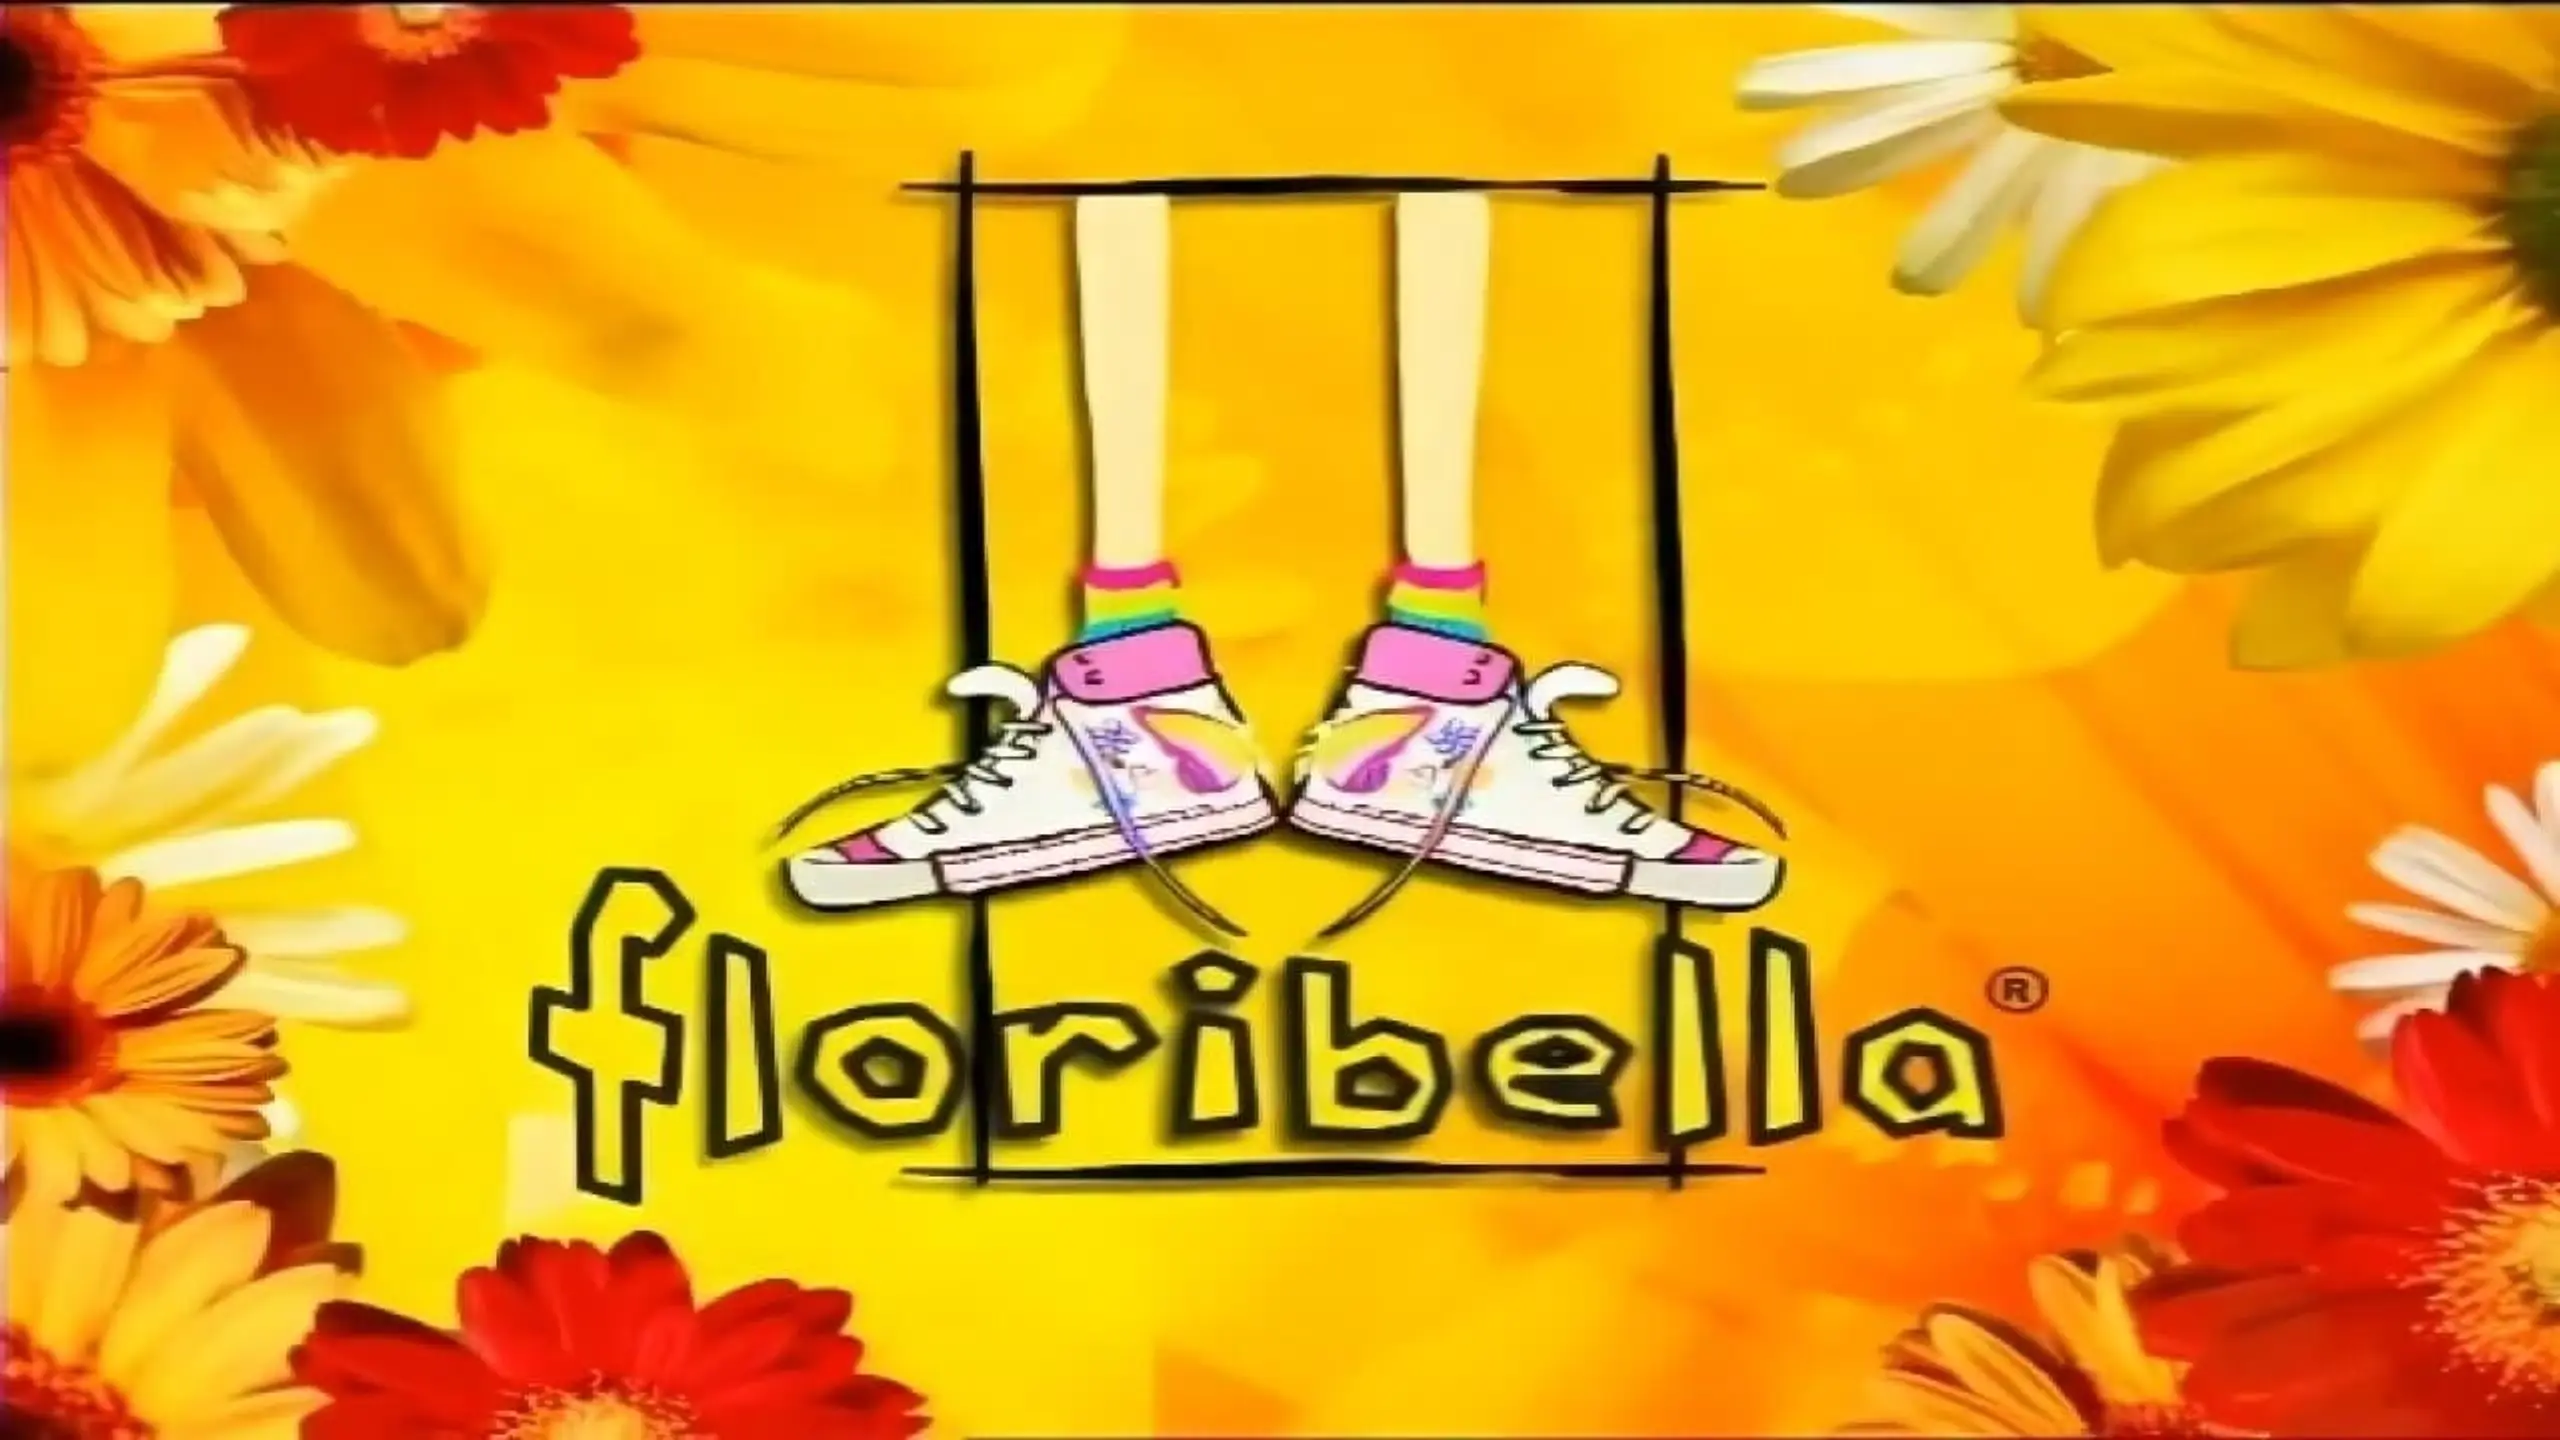 Floribella